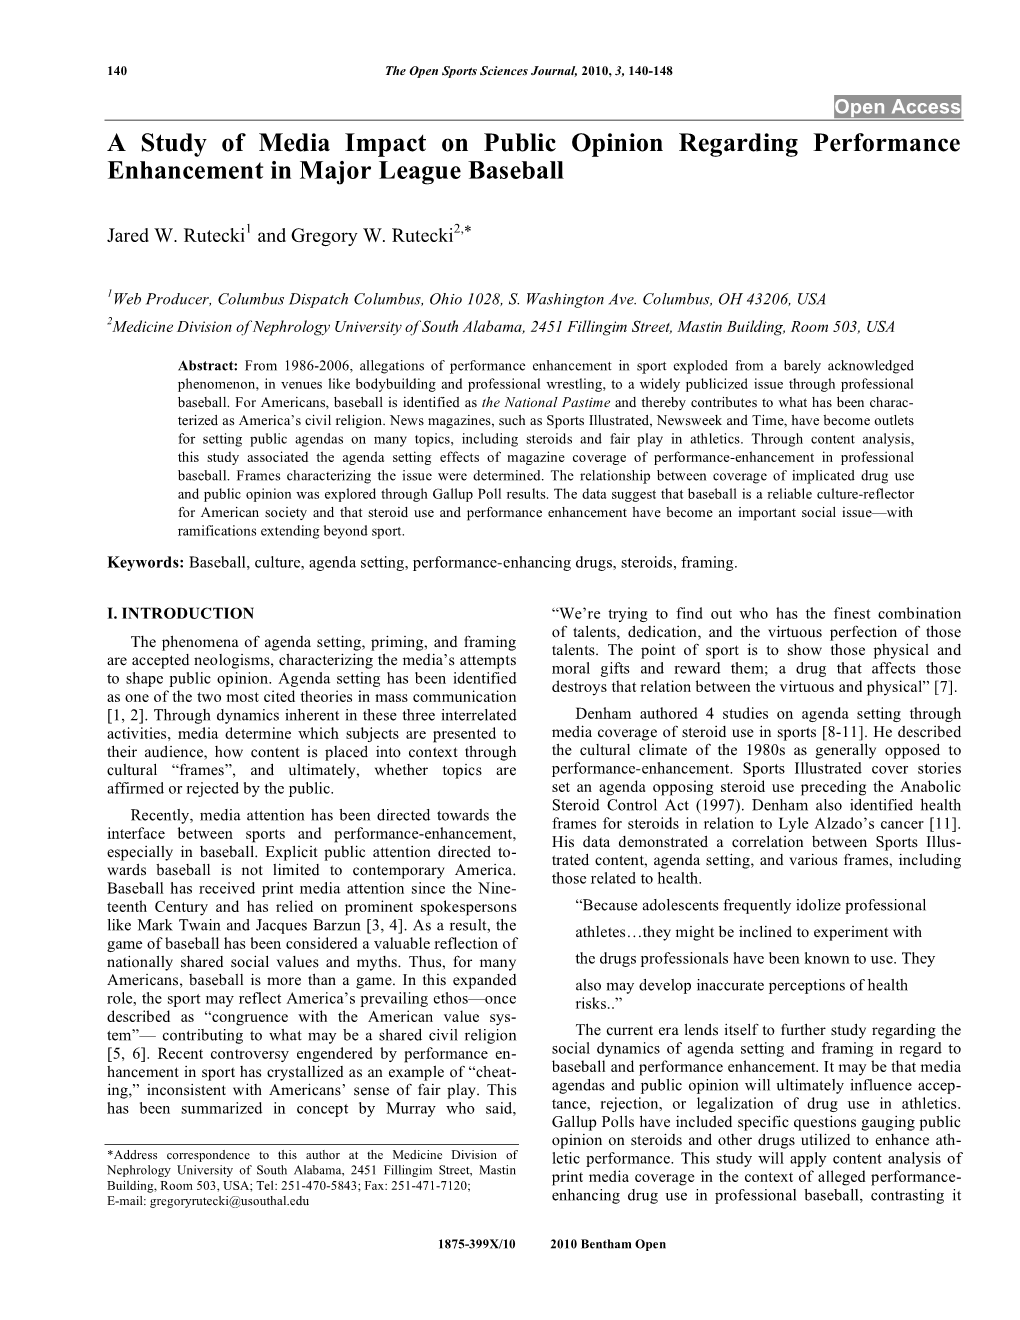 A Study of Media Impact on Public Opinion Regarding Performance Enhancement in Major League Baseball